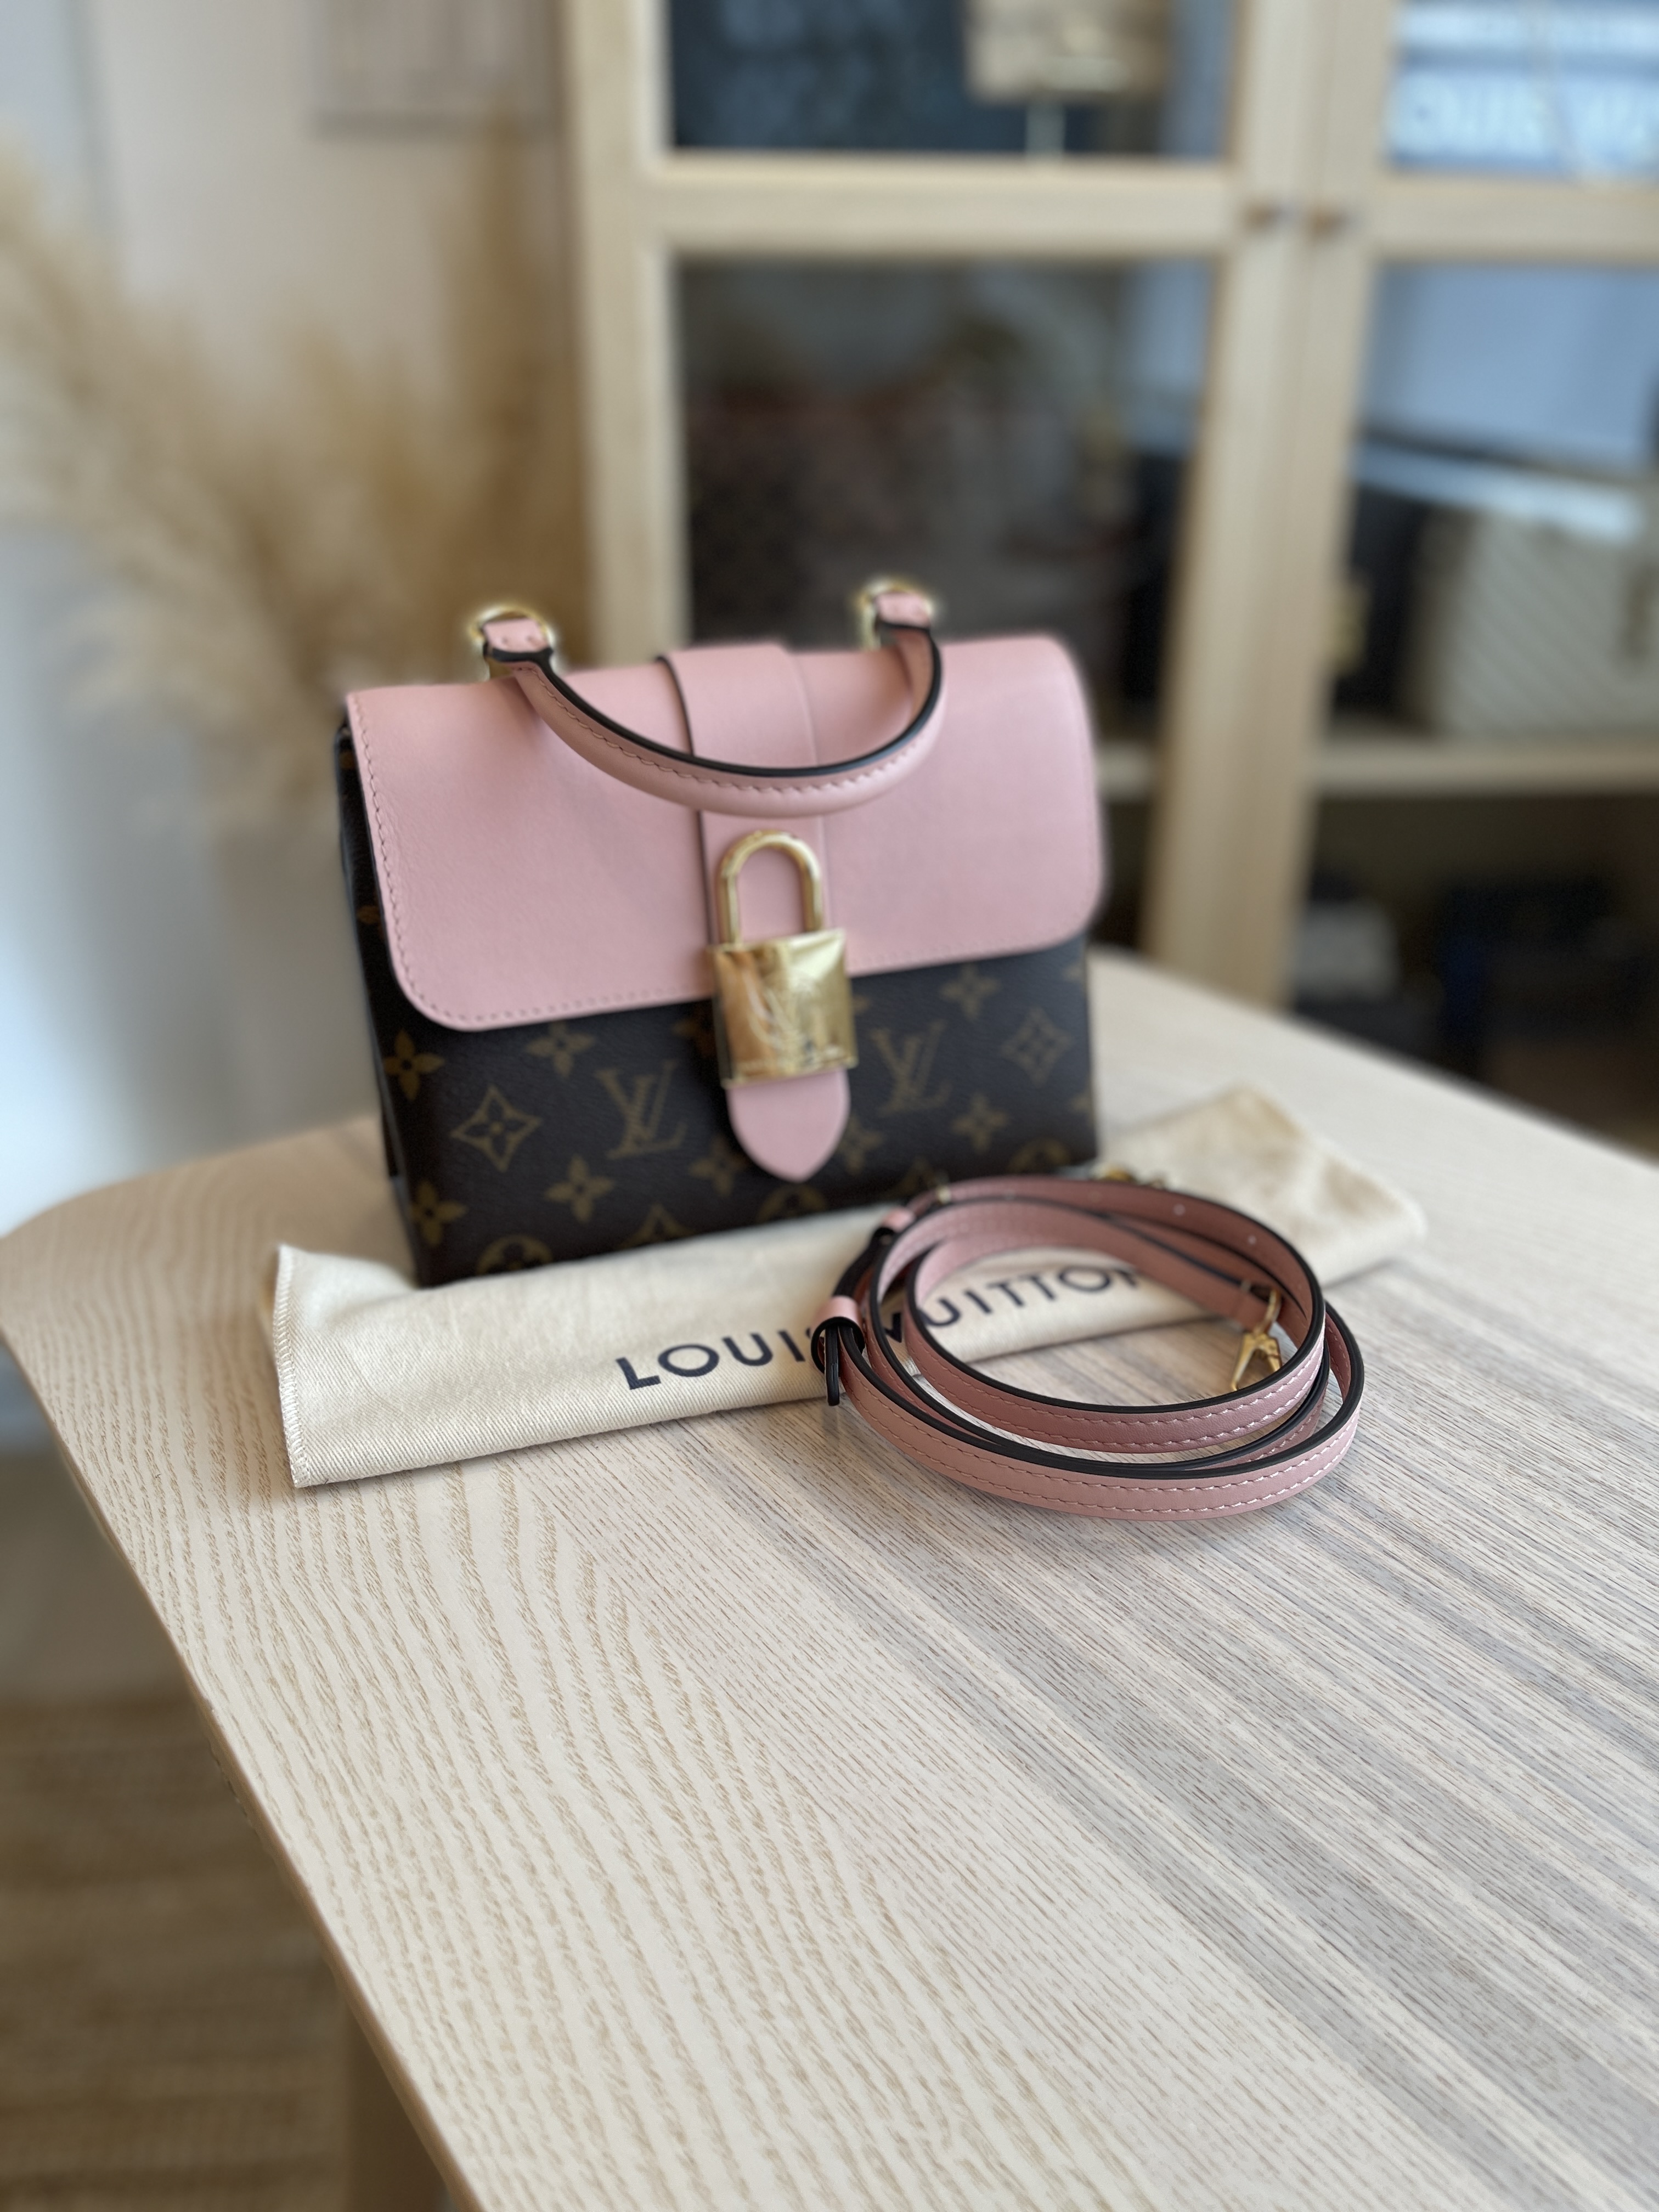 LOUIS VUITTON Monogram Locky BB in Rose Poudre (Pink) Handbag with